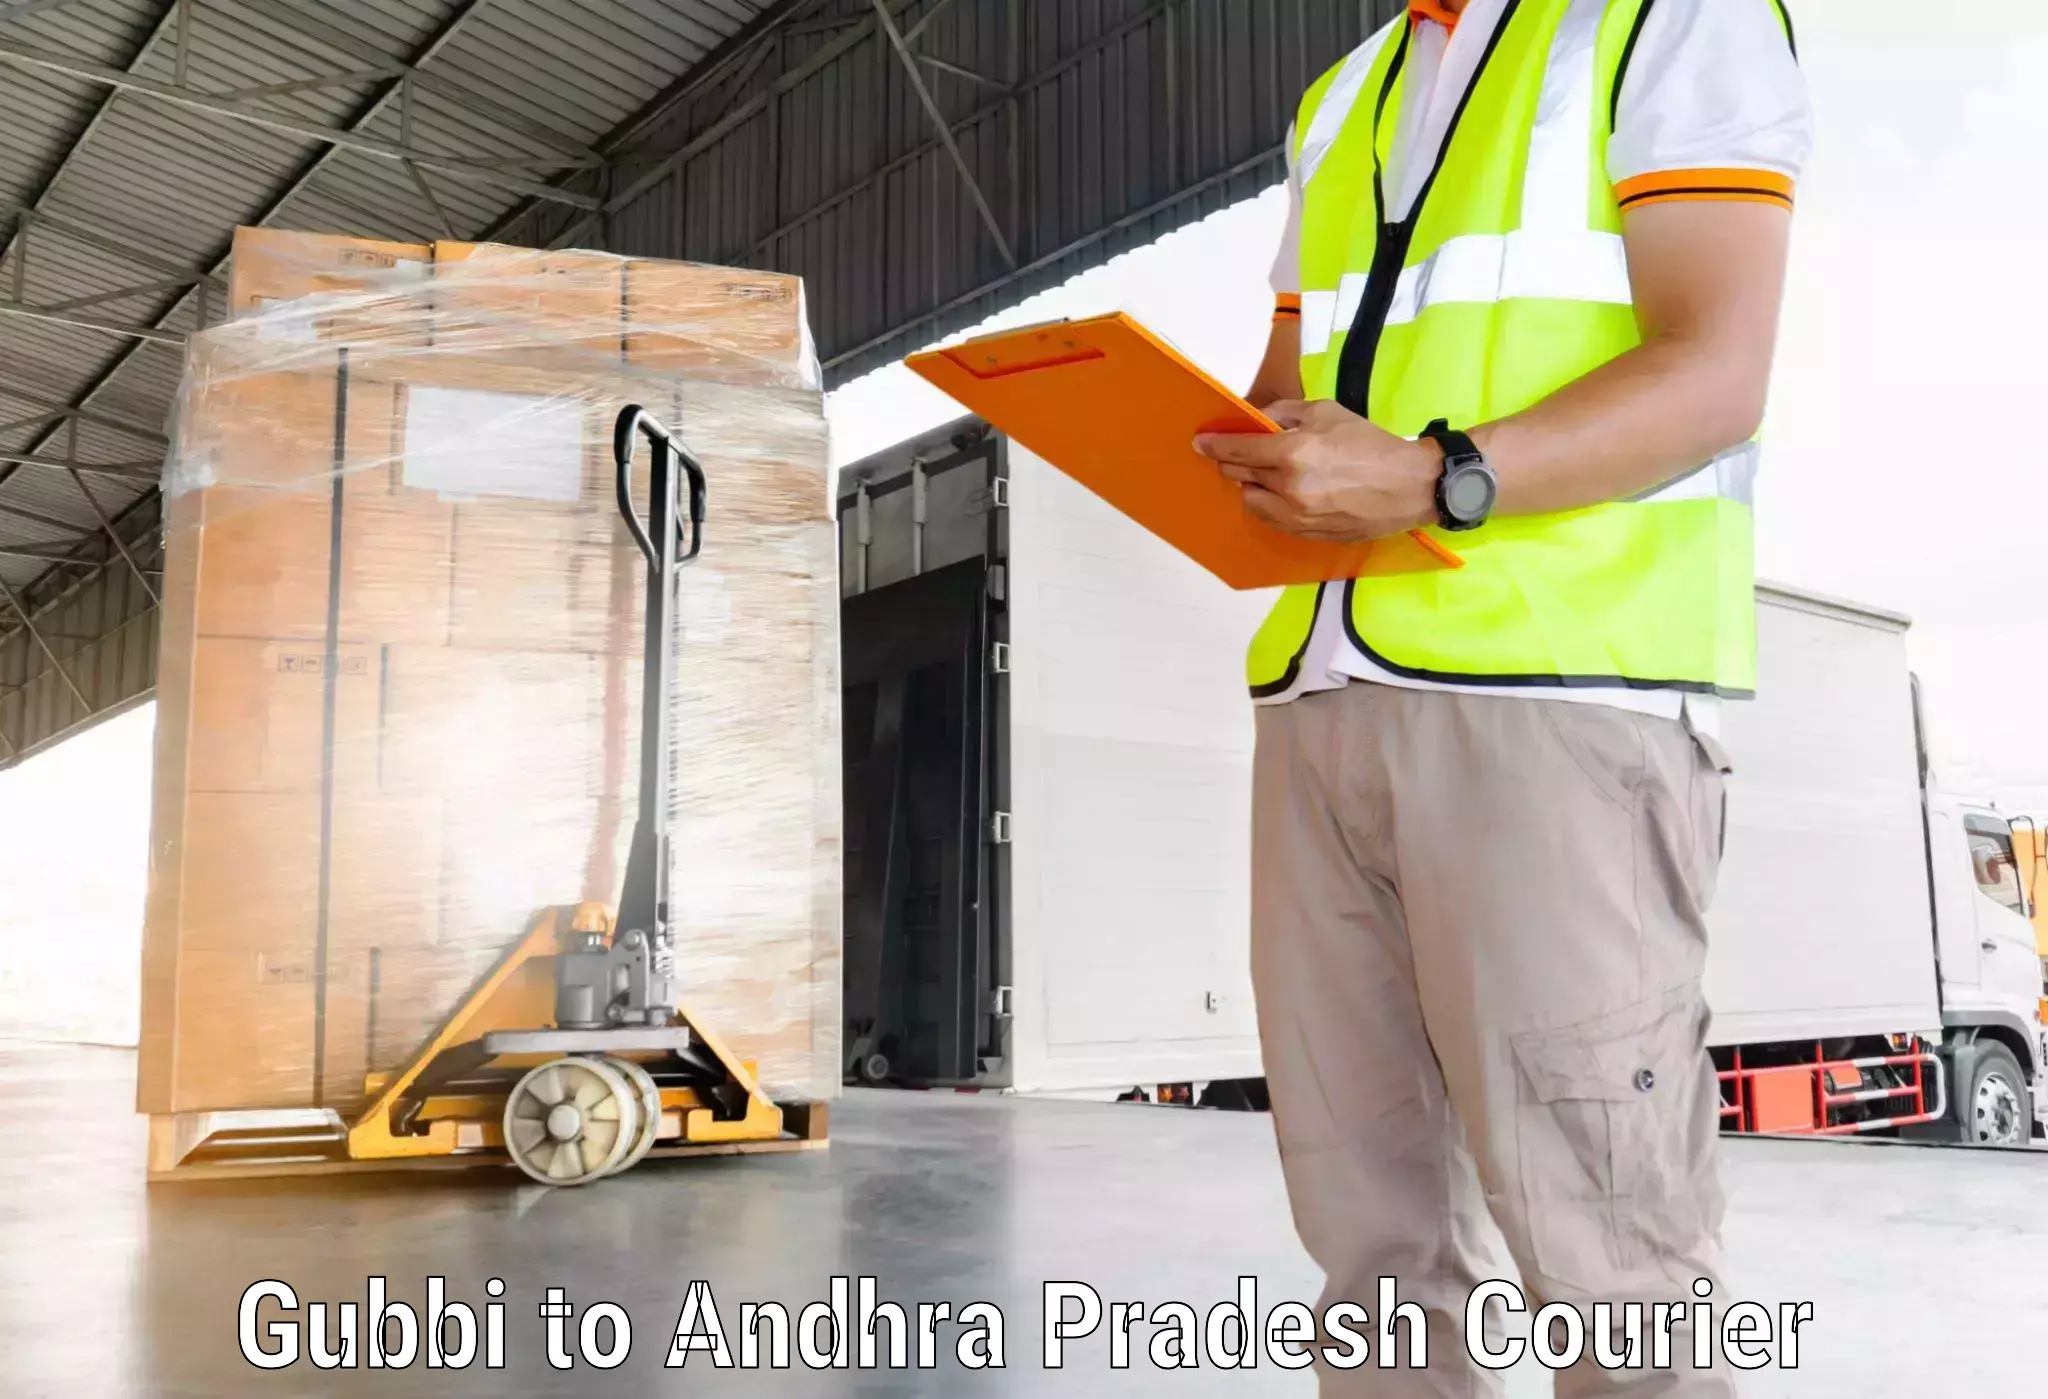 Flexible delivery scheduling Gubbi to Puttur Tirupati